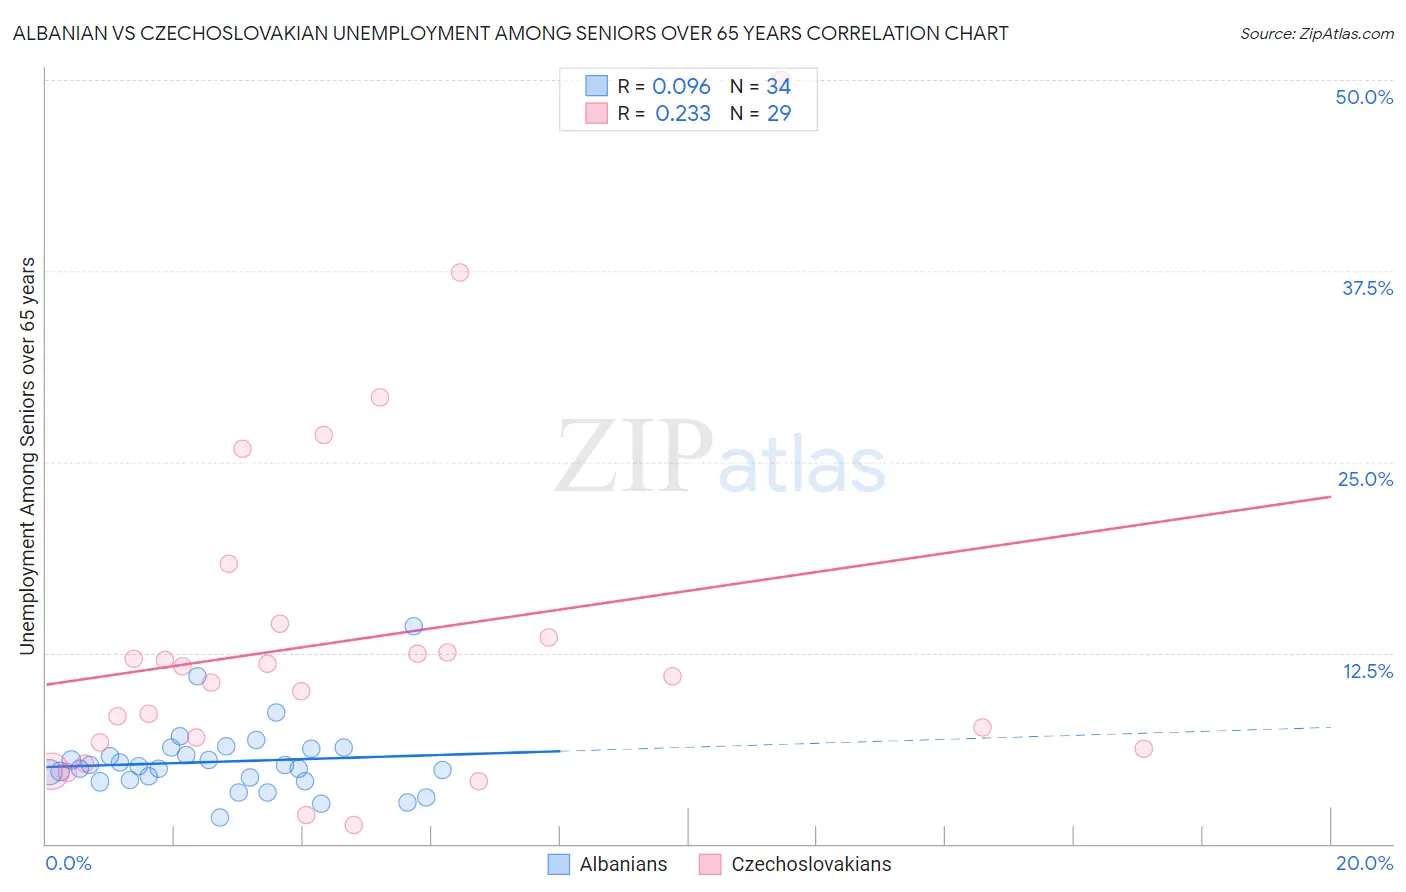 Albanian vs Czechoslovakian Unemployment Among Seniors over 65 years